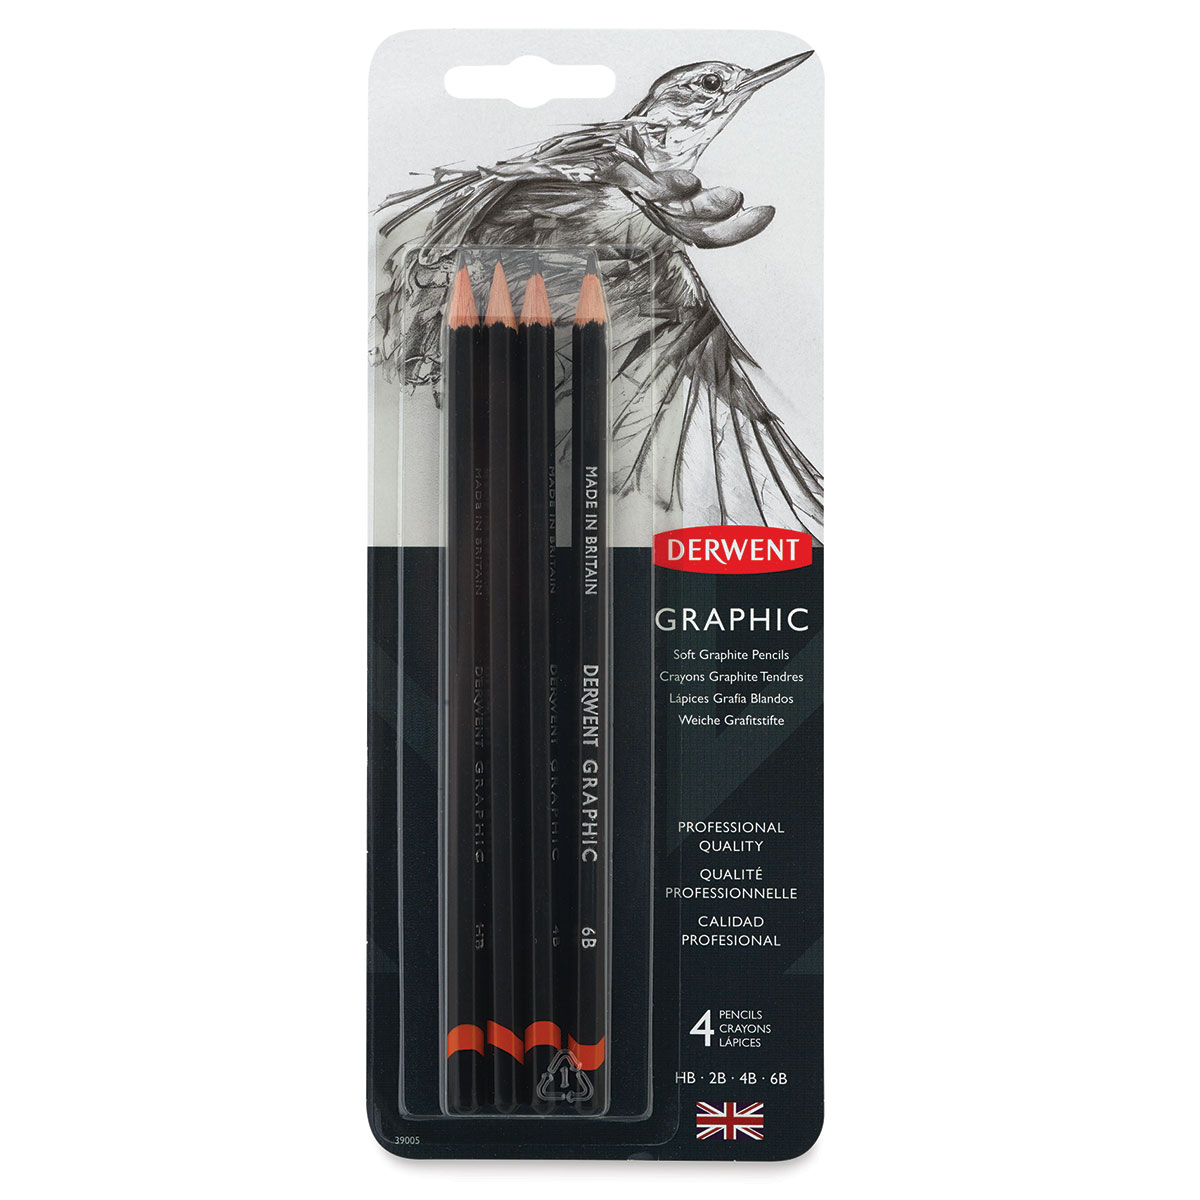 Derwent Graphic Pencils, Medium, Set of 12